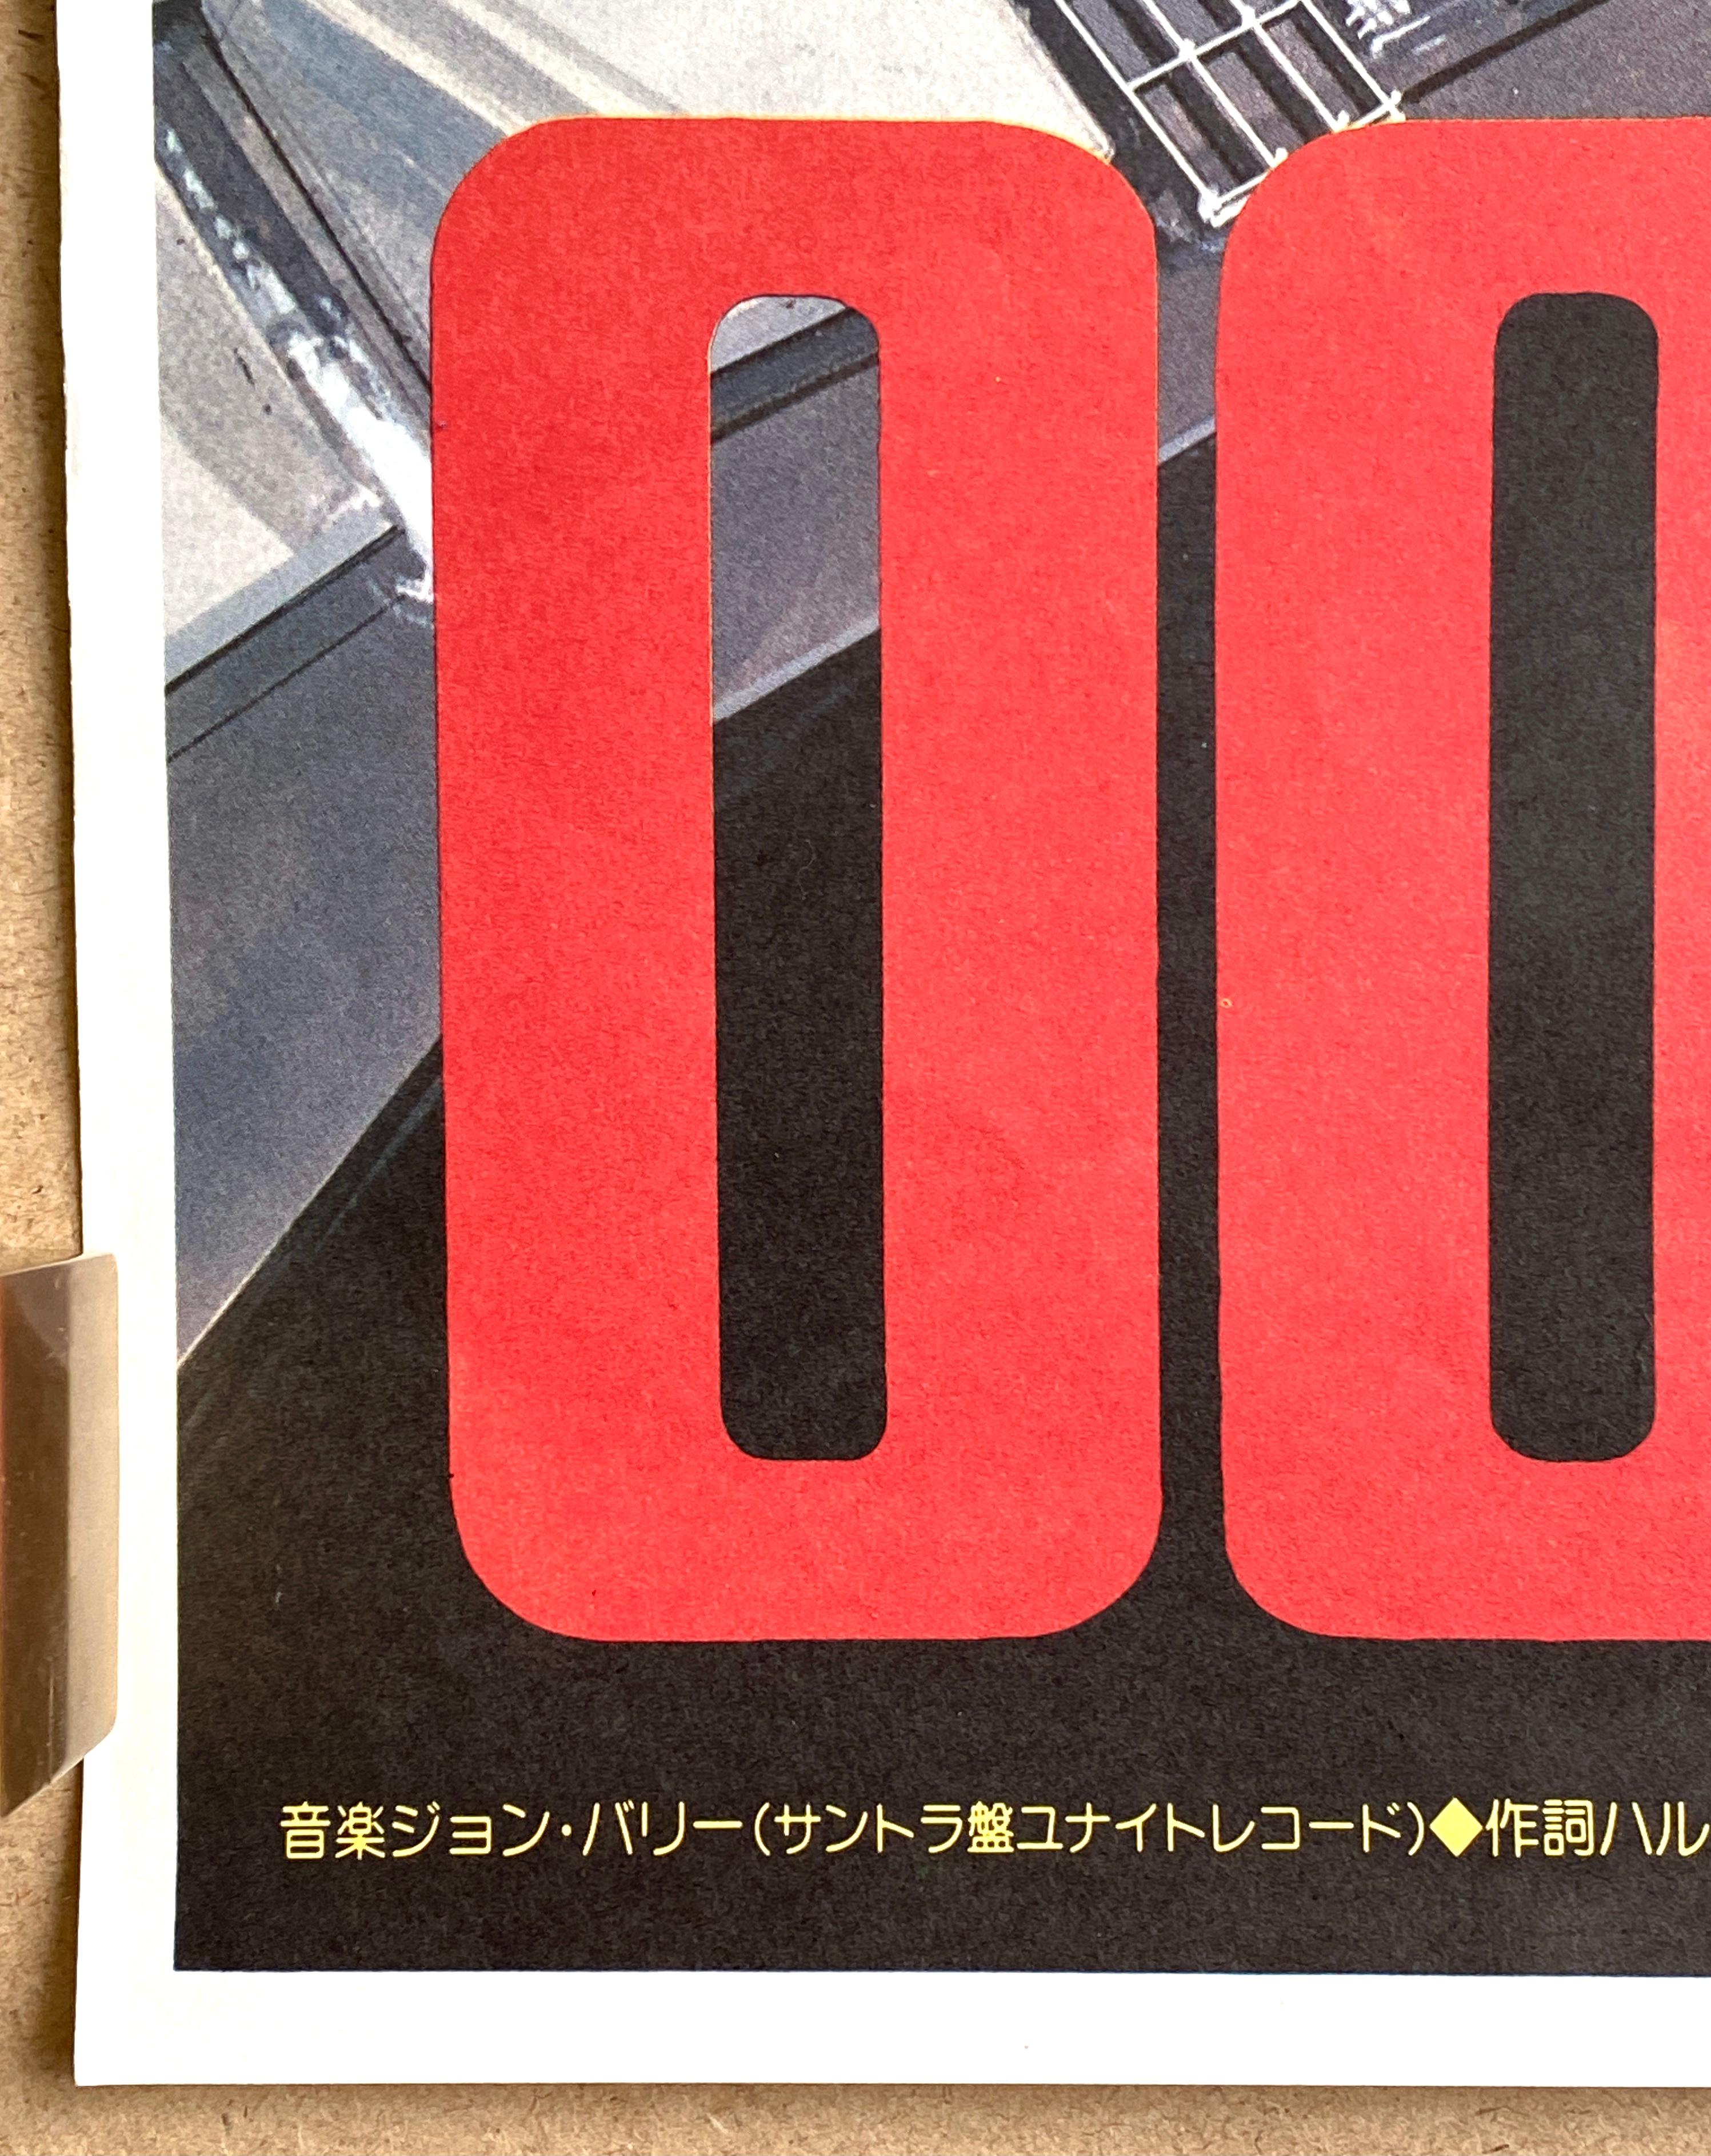 James Bond 'Moonraker' Original Vintage Movie Poster, Japanese, 1979 1